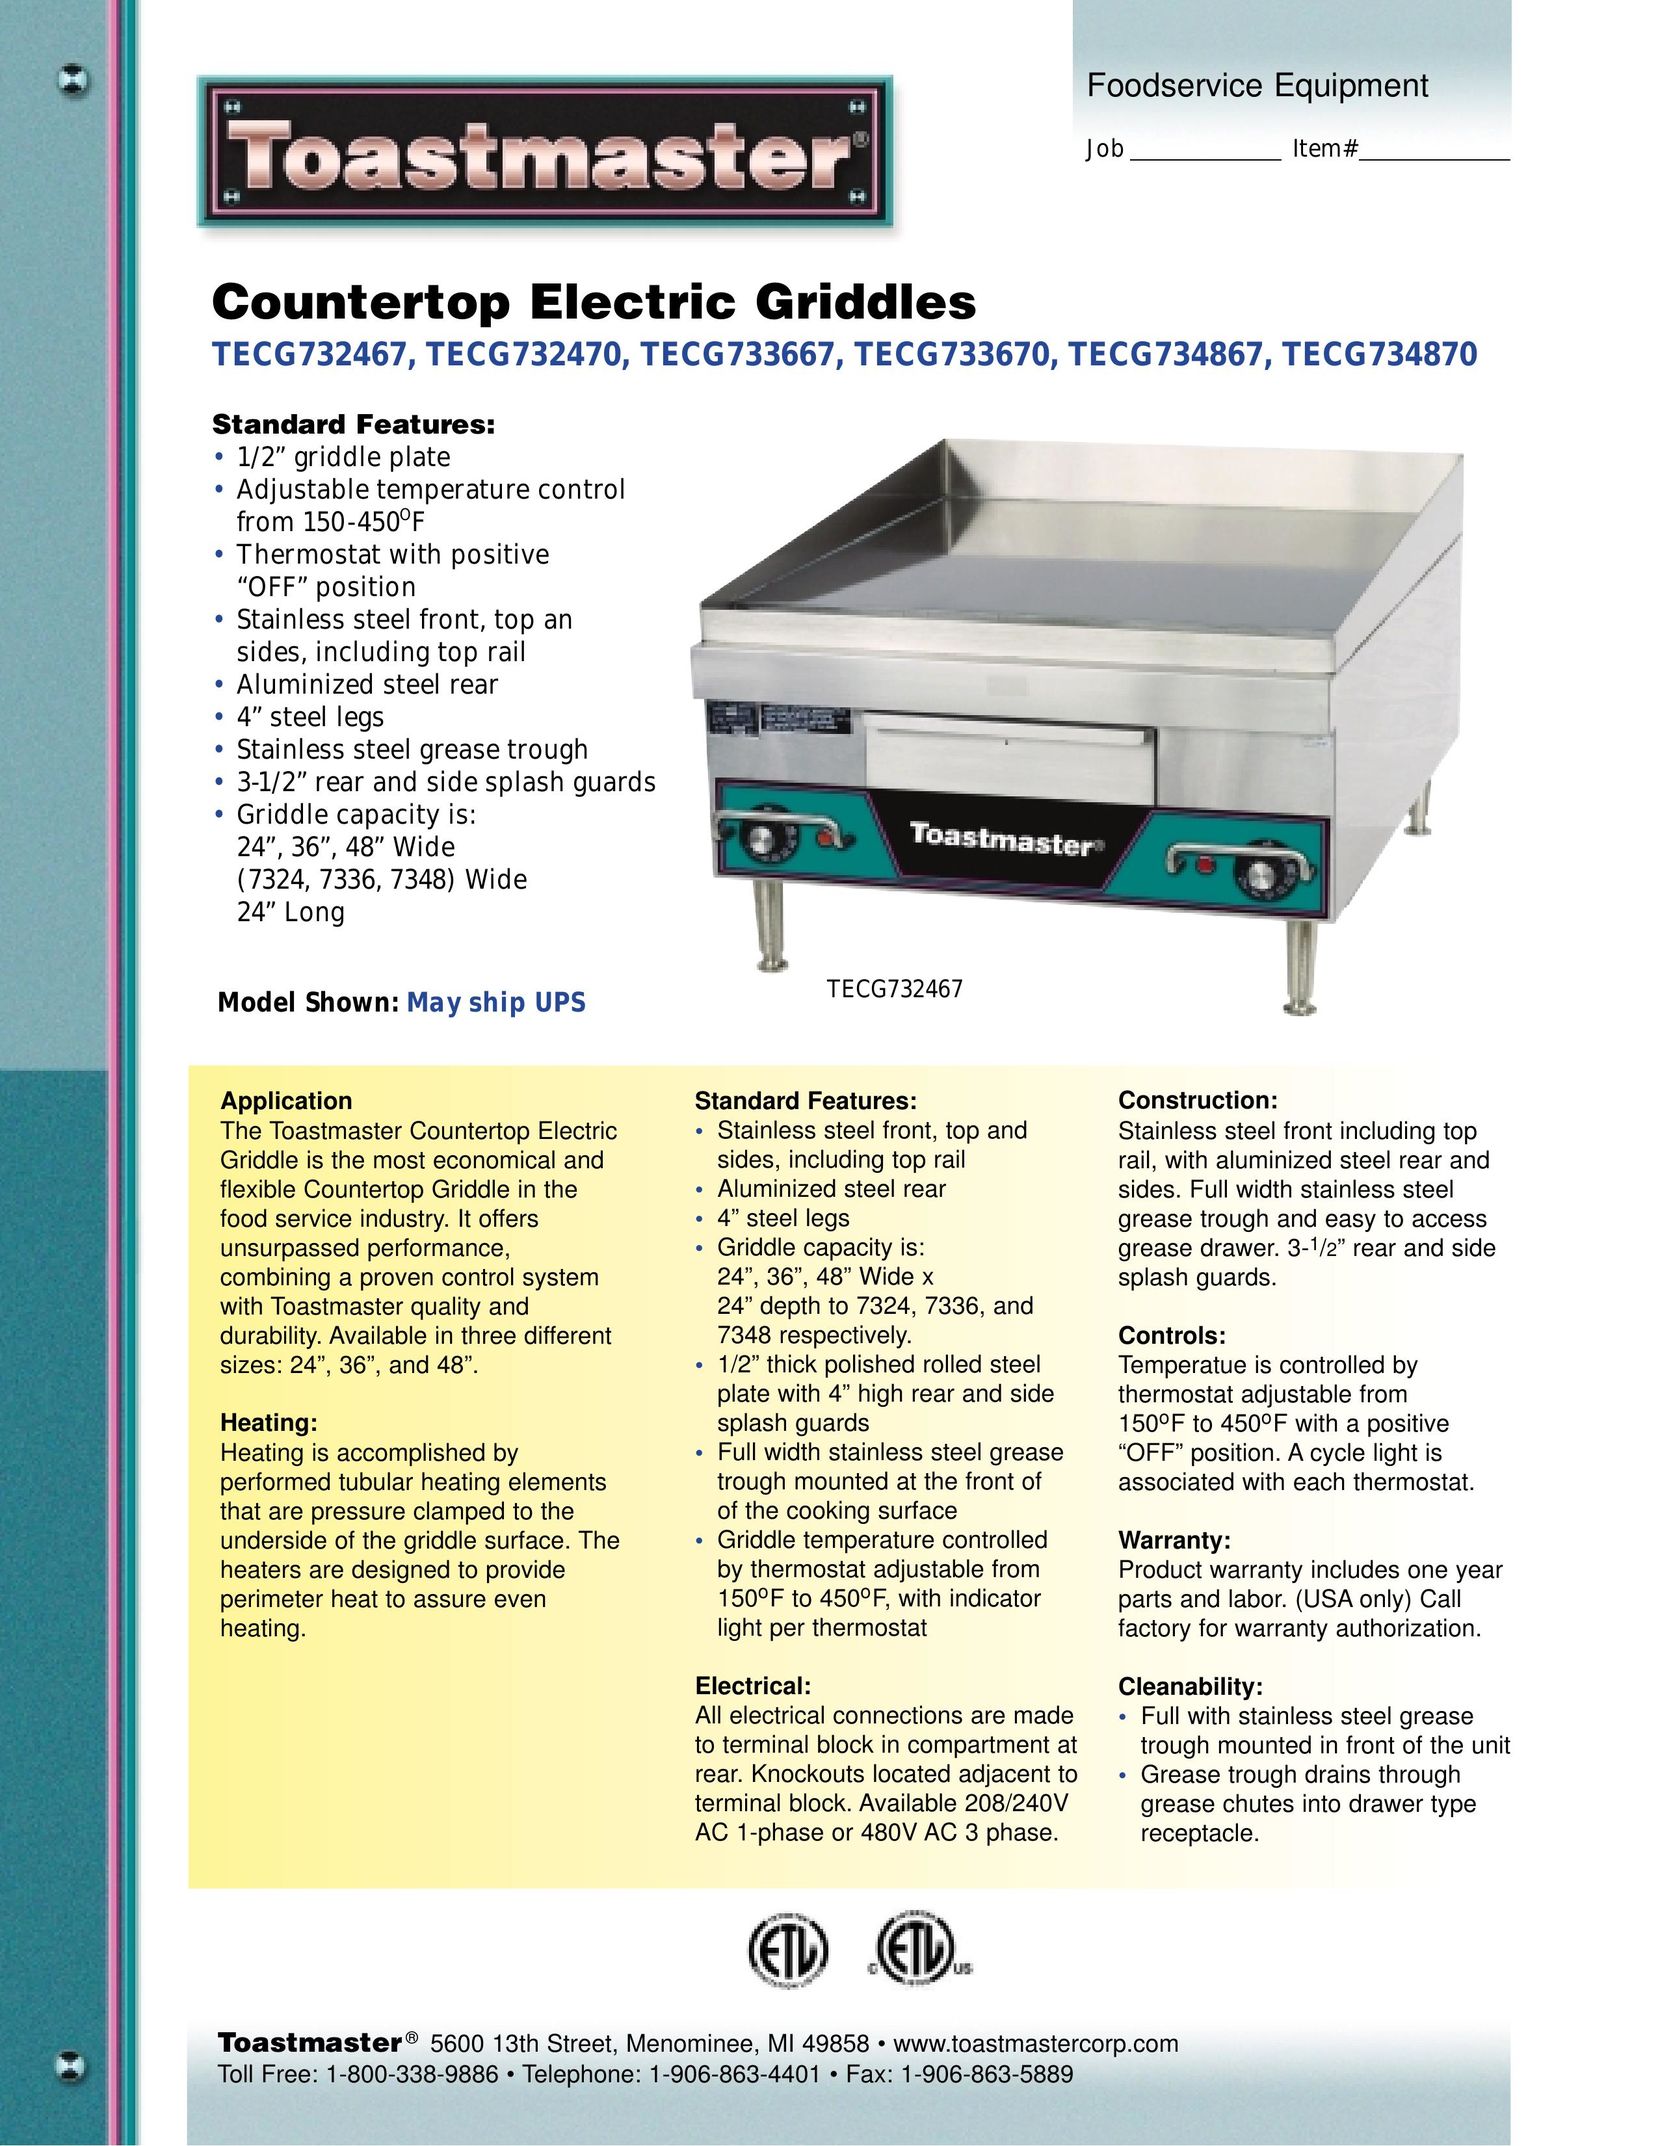 Toastmaster TECG733670 Griddle User Manual